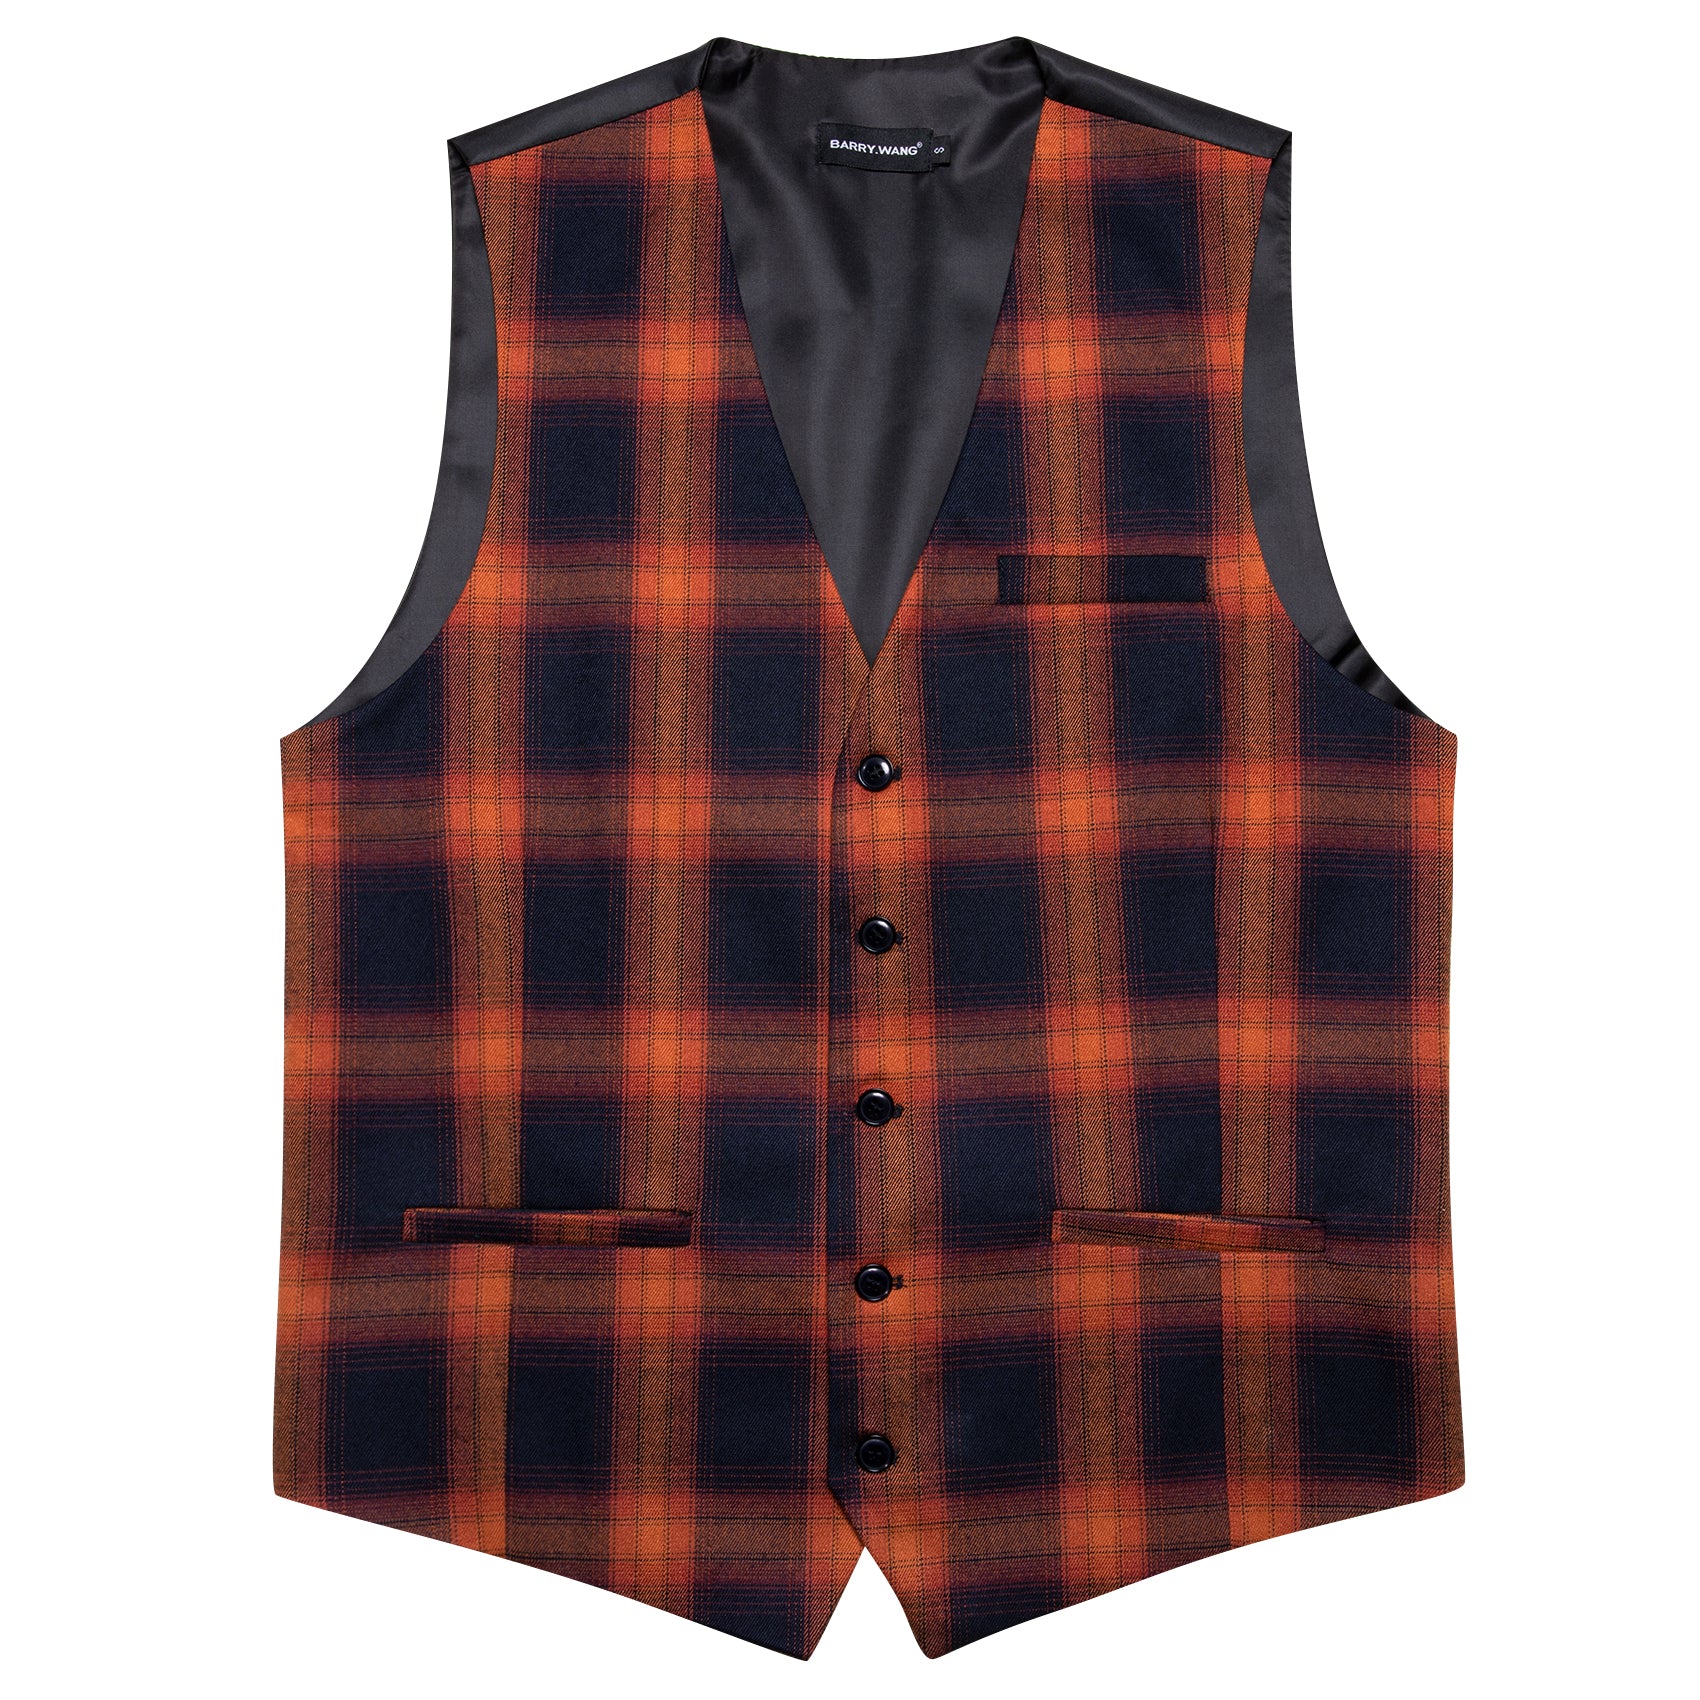 Barry.wang Orange Black Plaid Waistcoat Vest